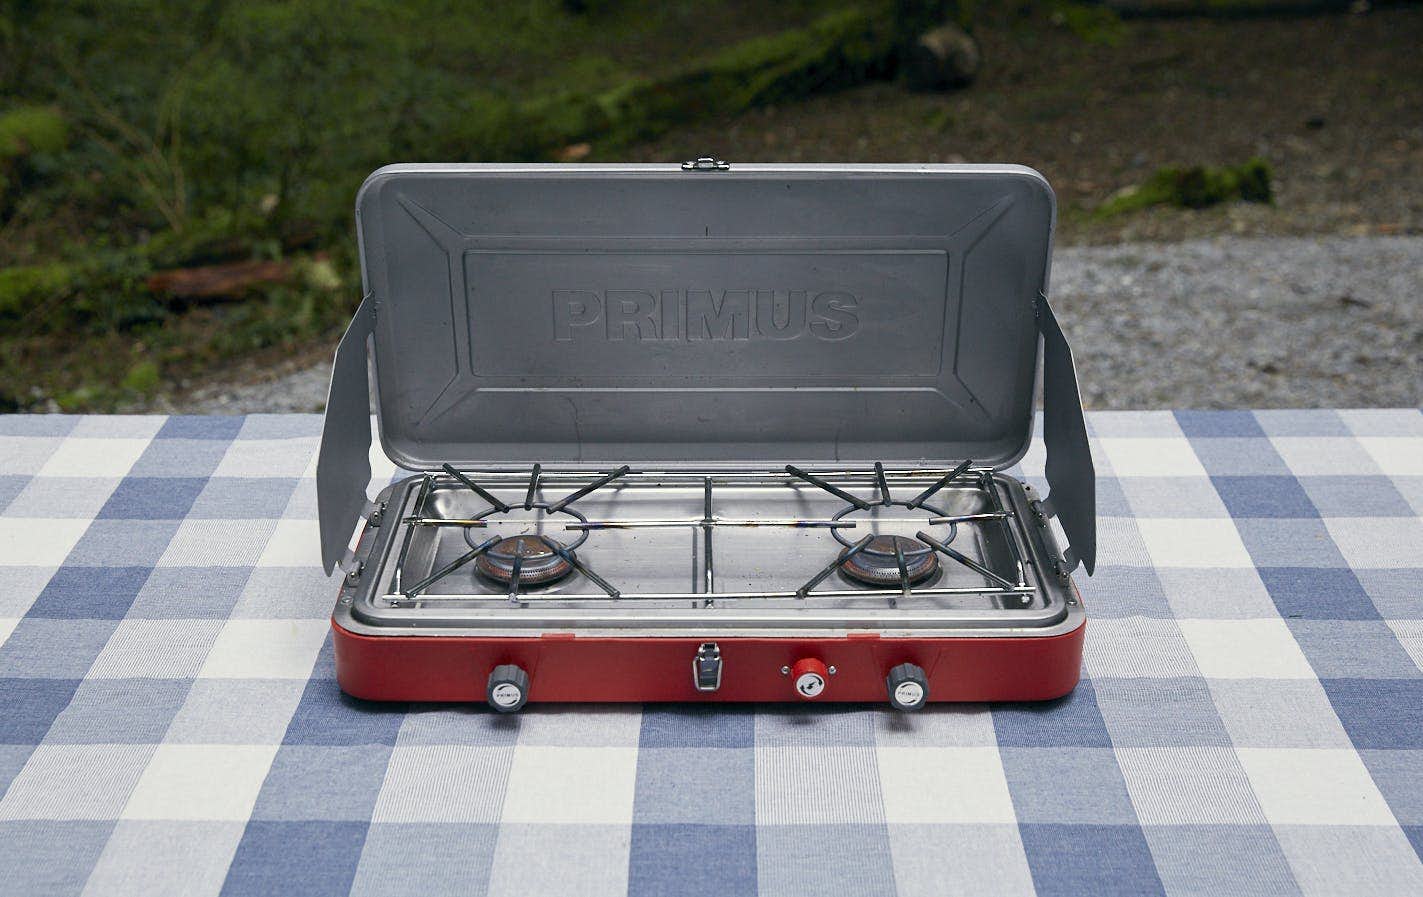 Primus two-burner stove